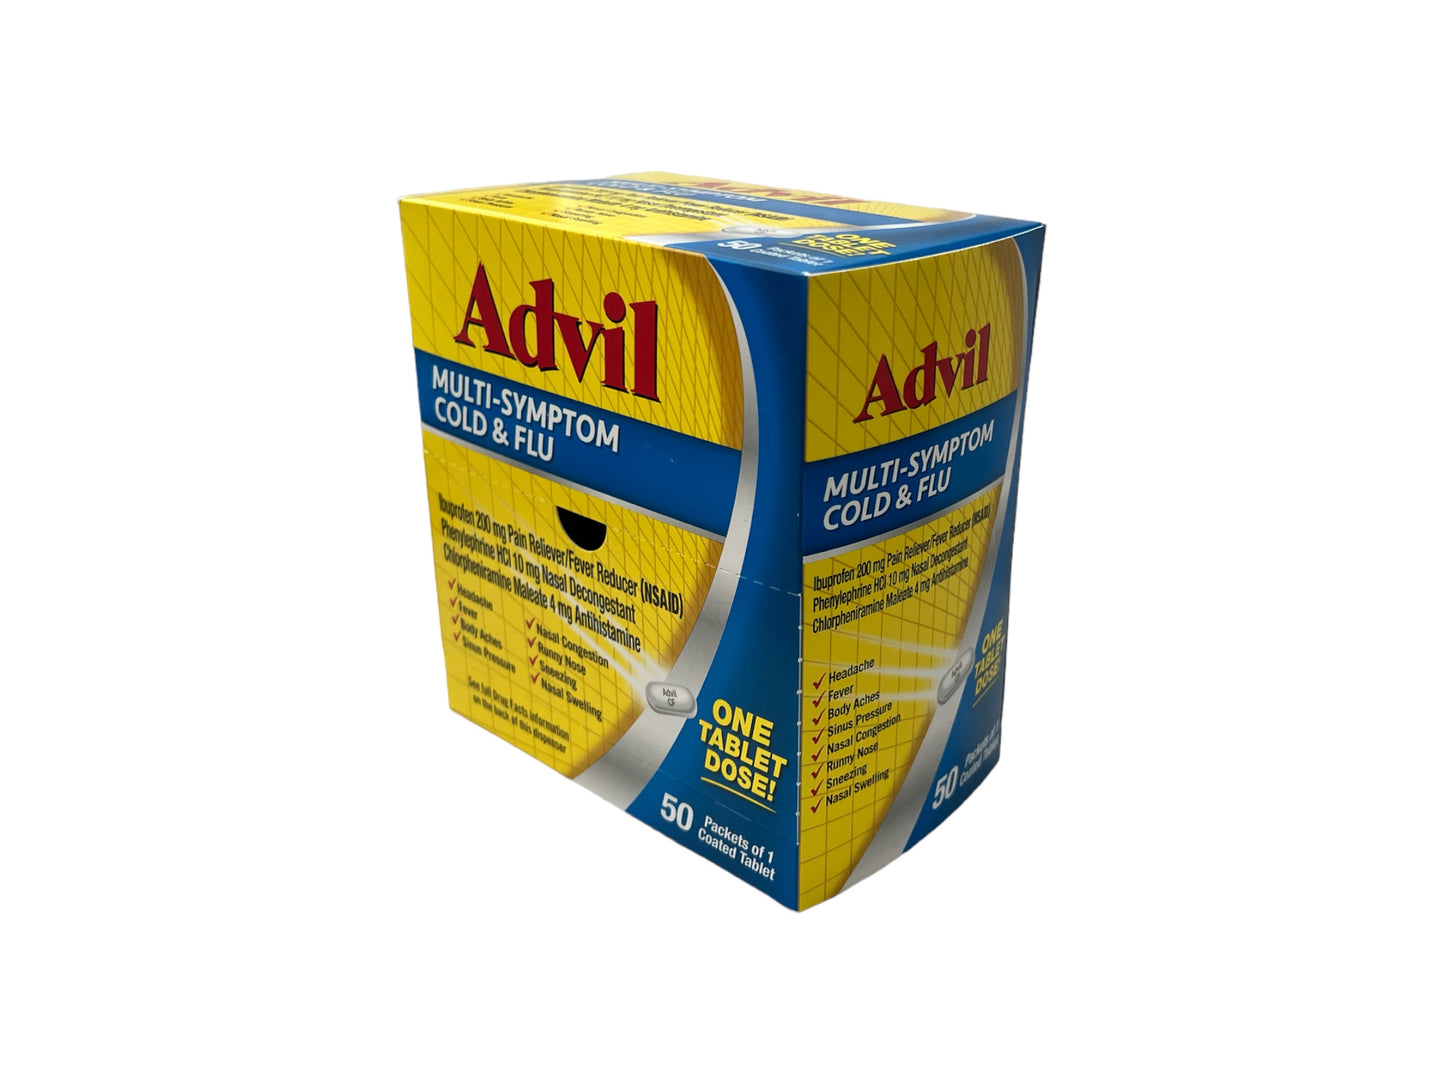 Advil Multi-Symptom Cold & Flu 50-Packs of 1